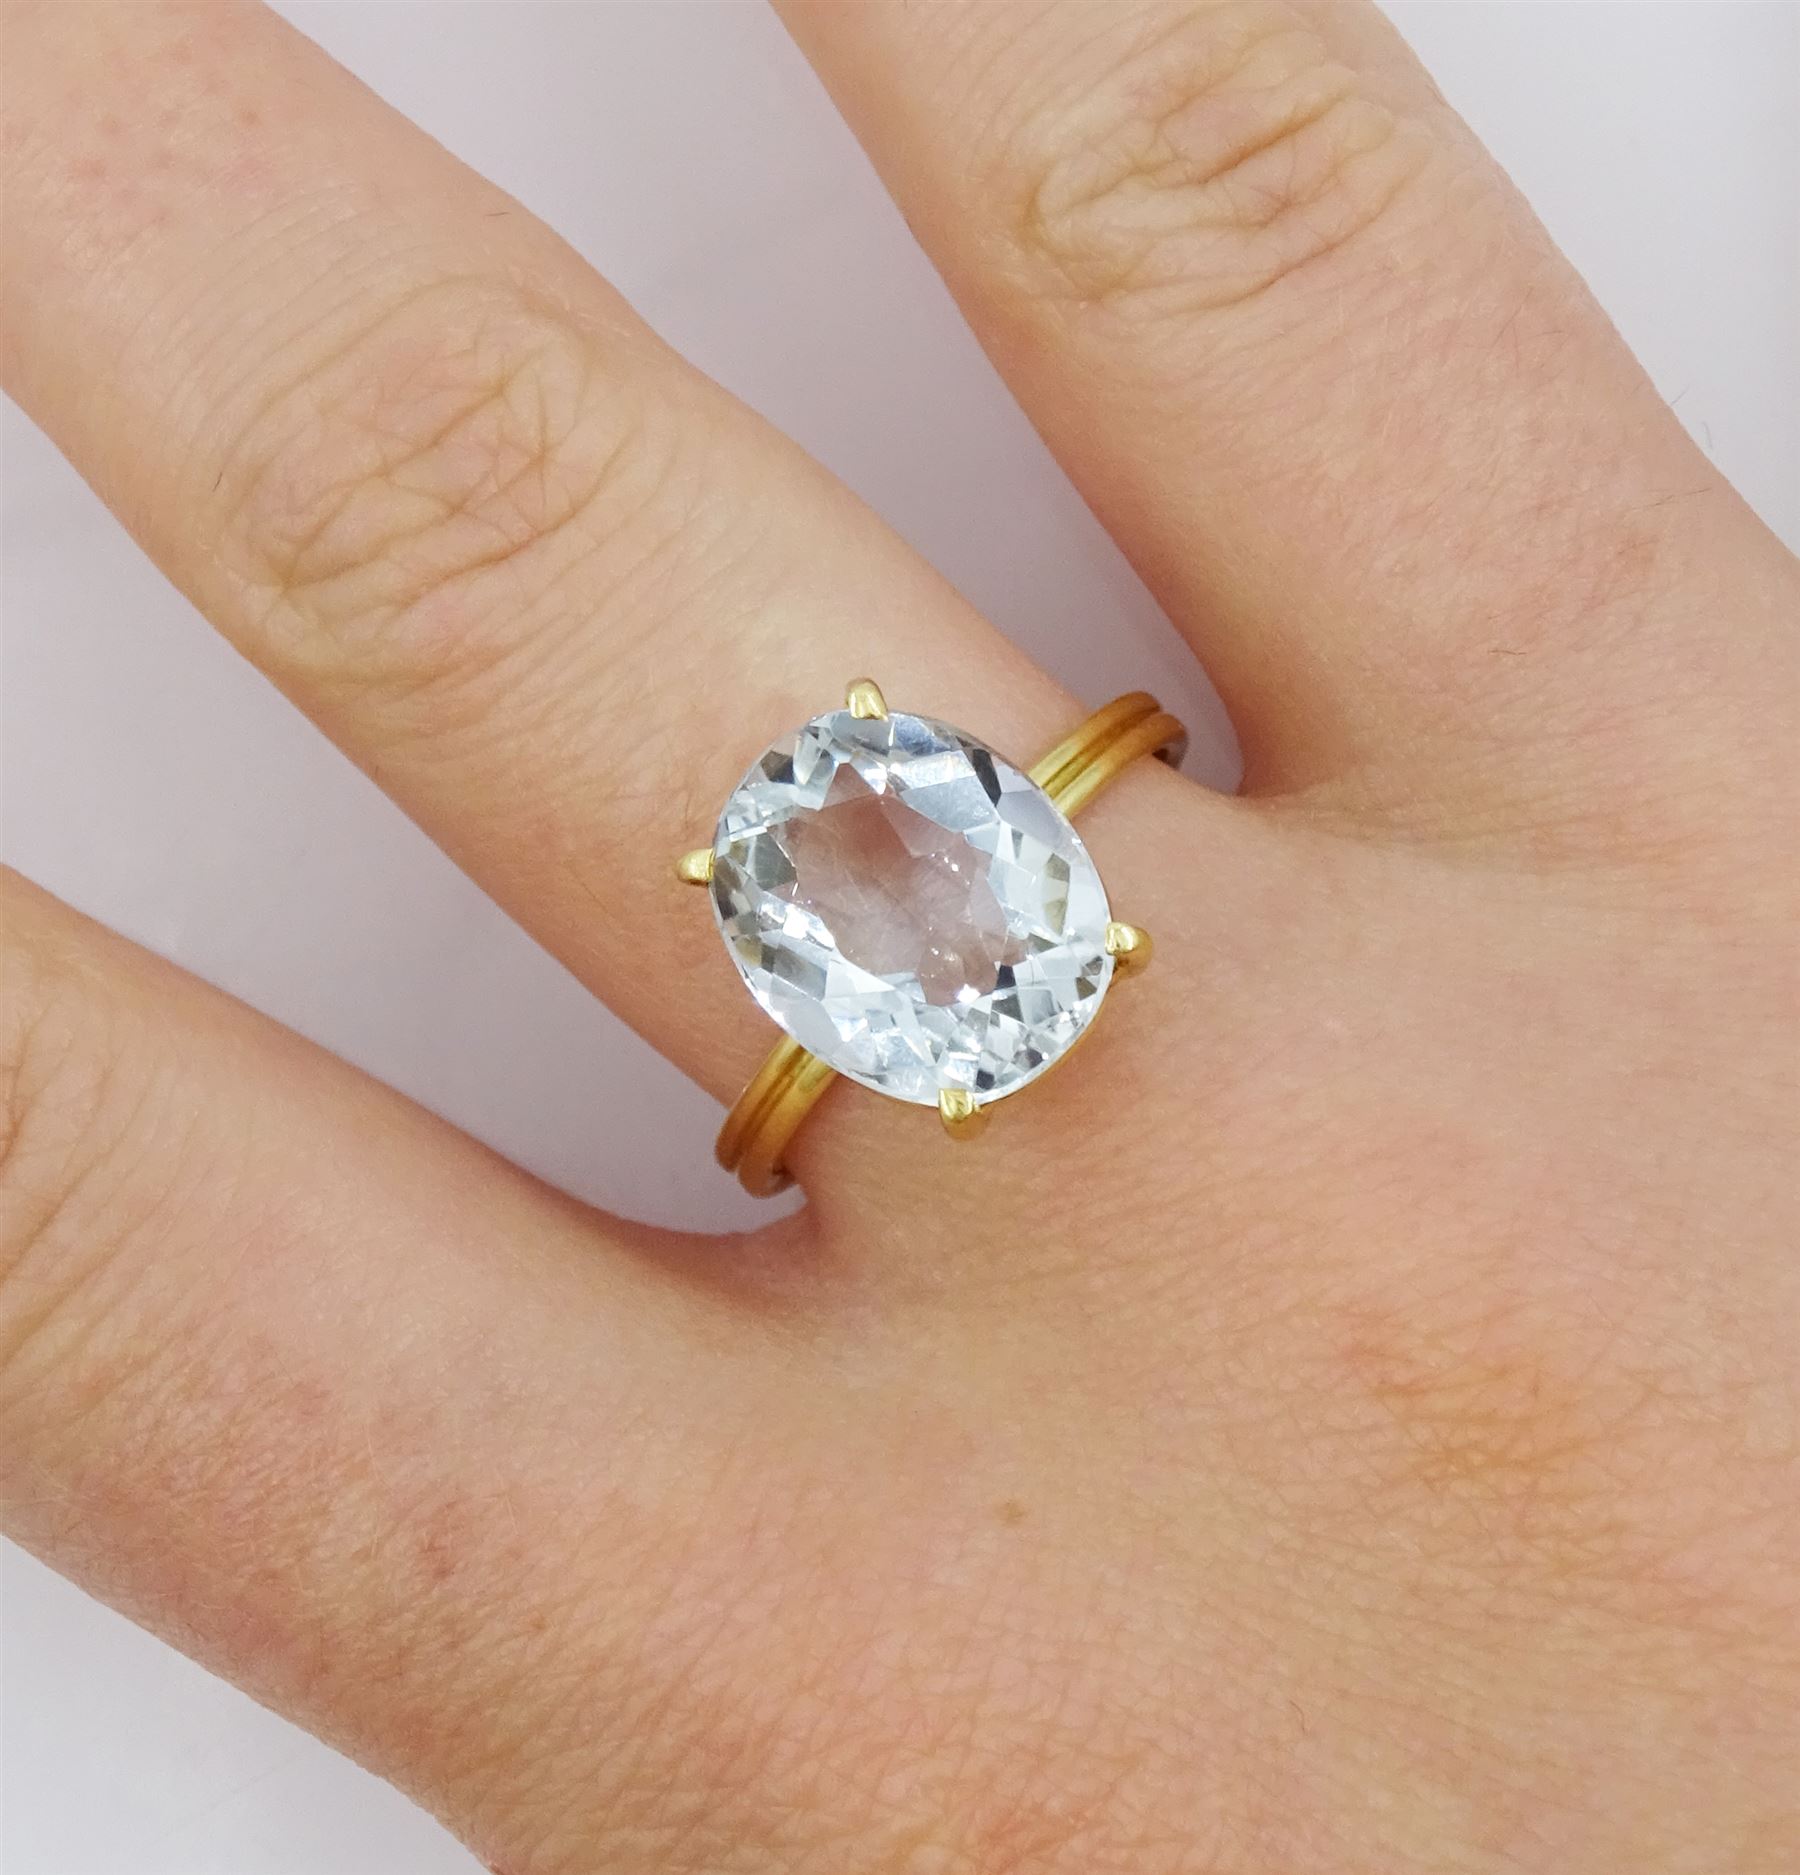 18ct gold single stone oval cut aquamarine ring - Image 2 of 4